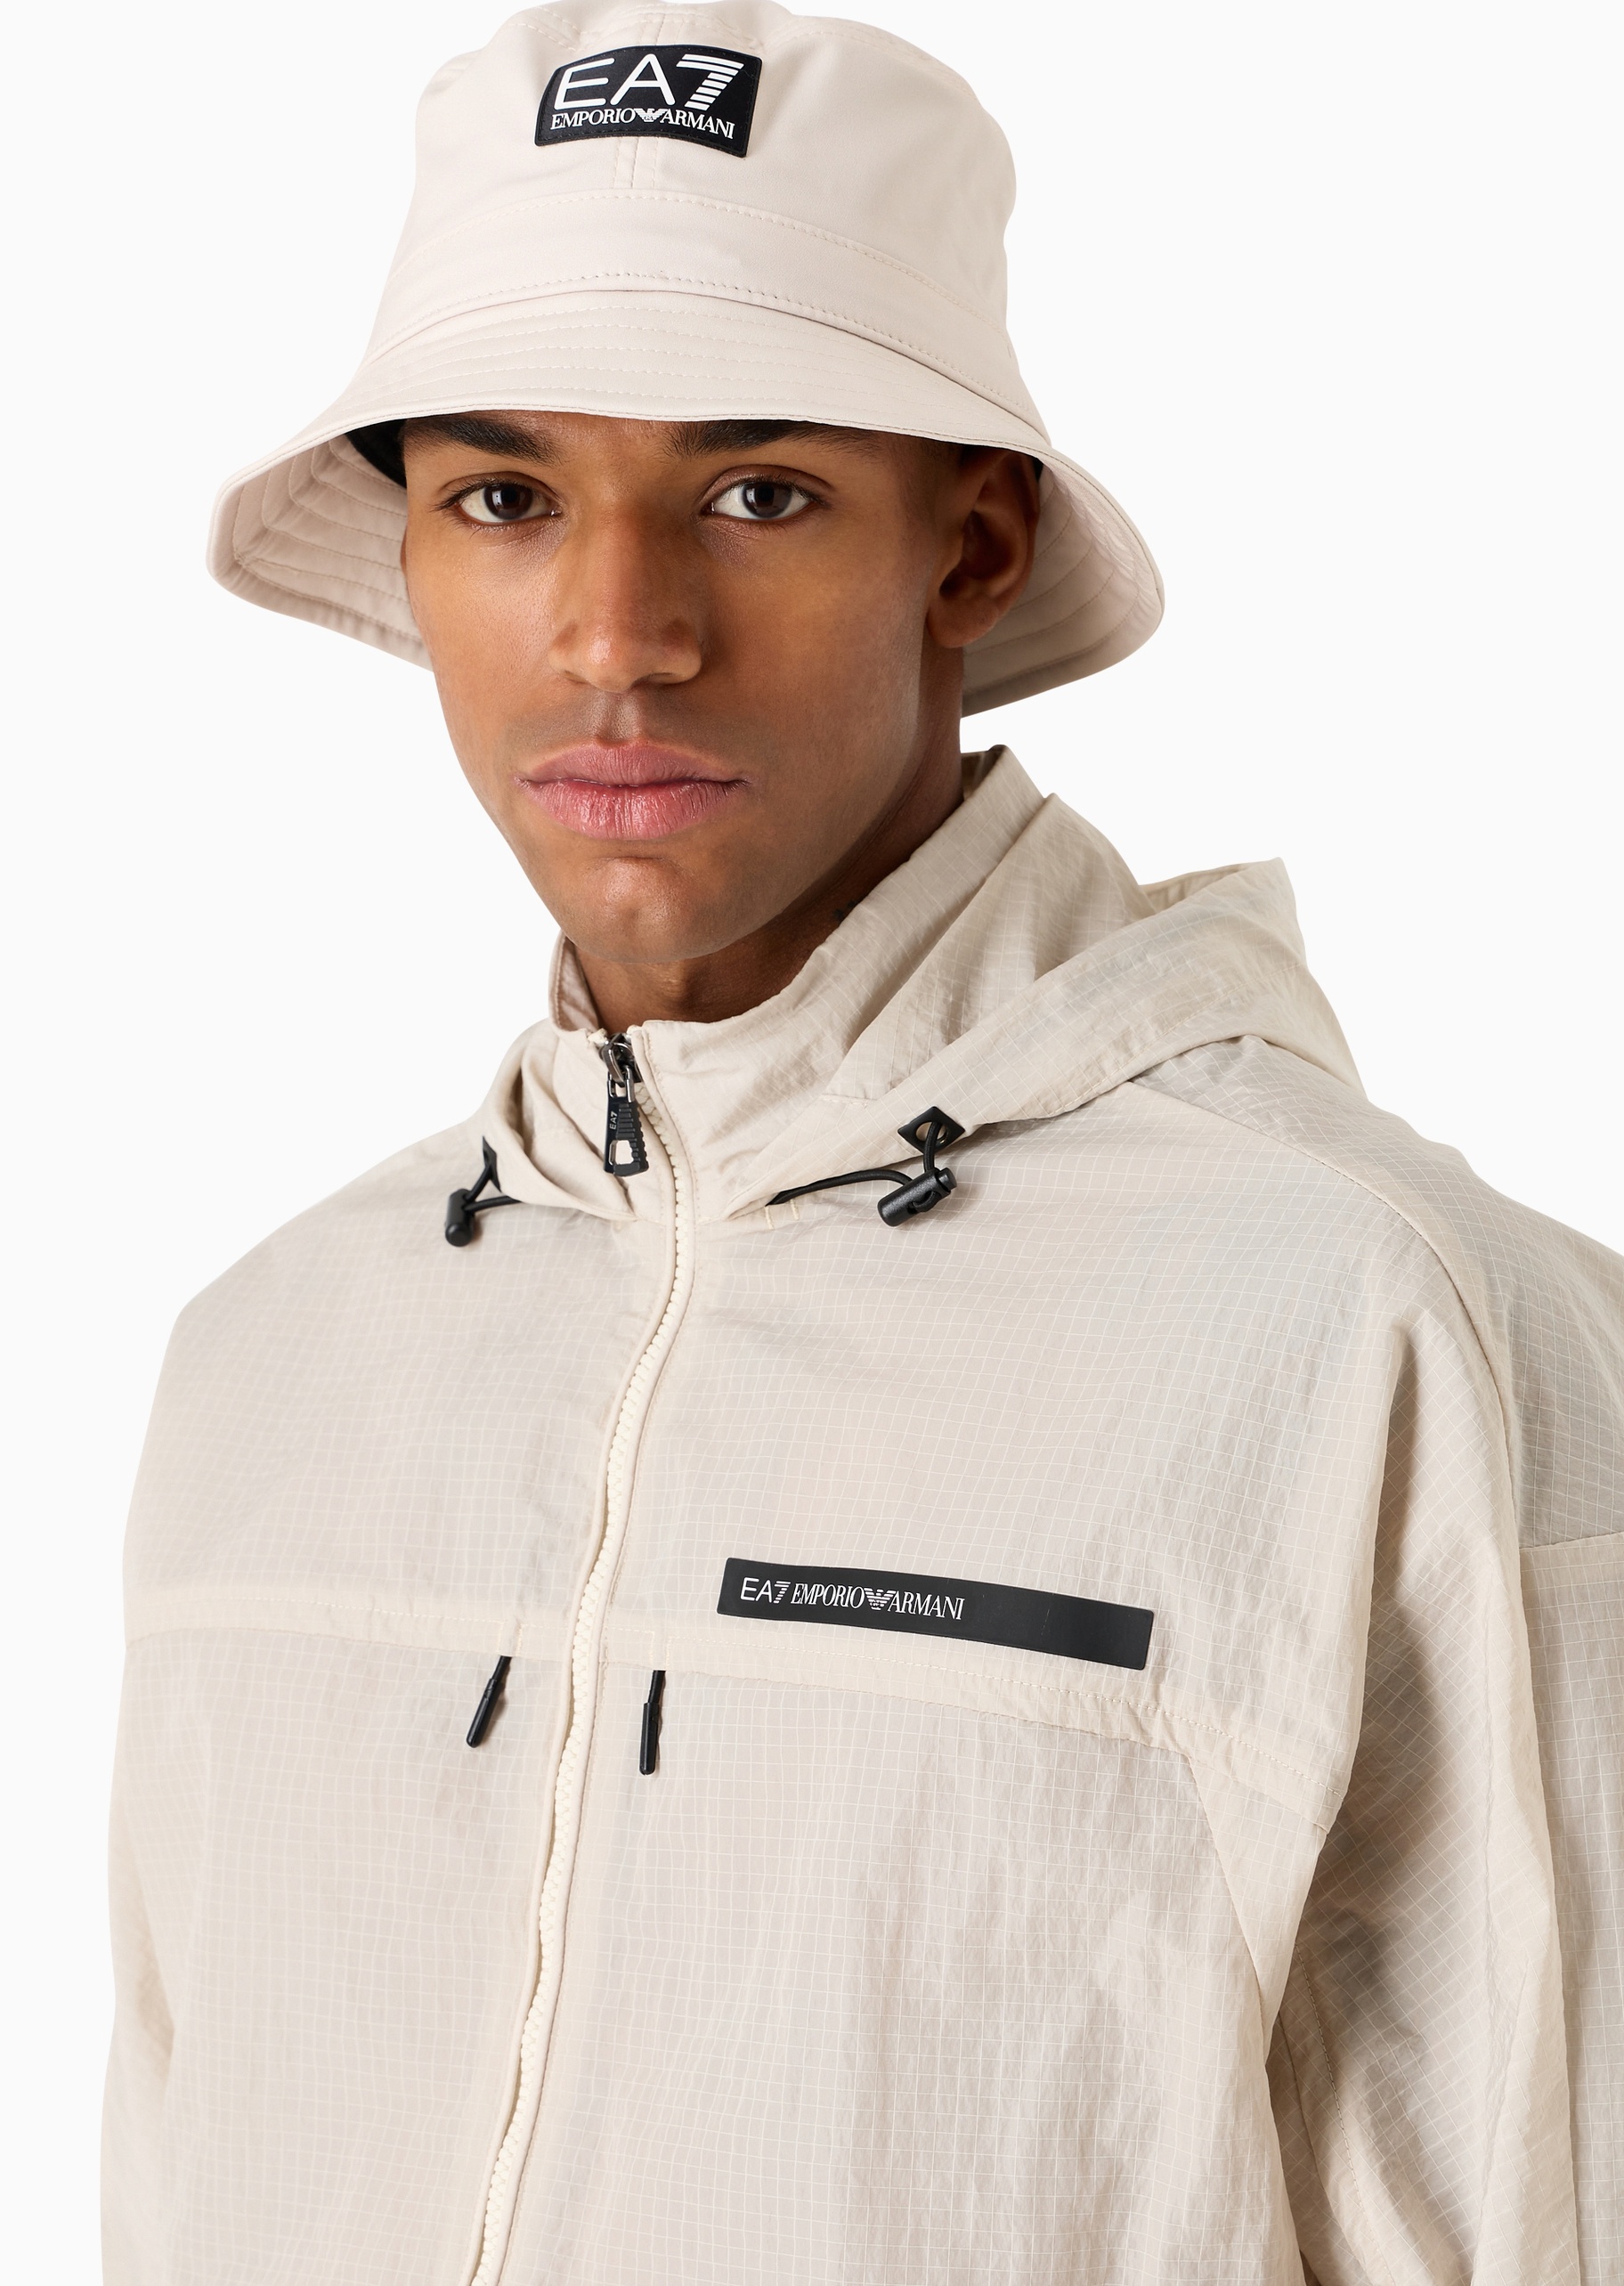 EA7 男士合身长袖连帽印花健身飞行员夹克薄外套